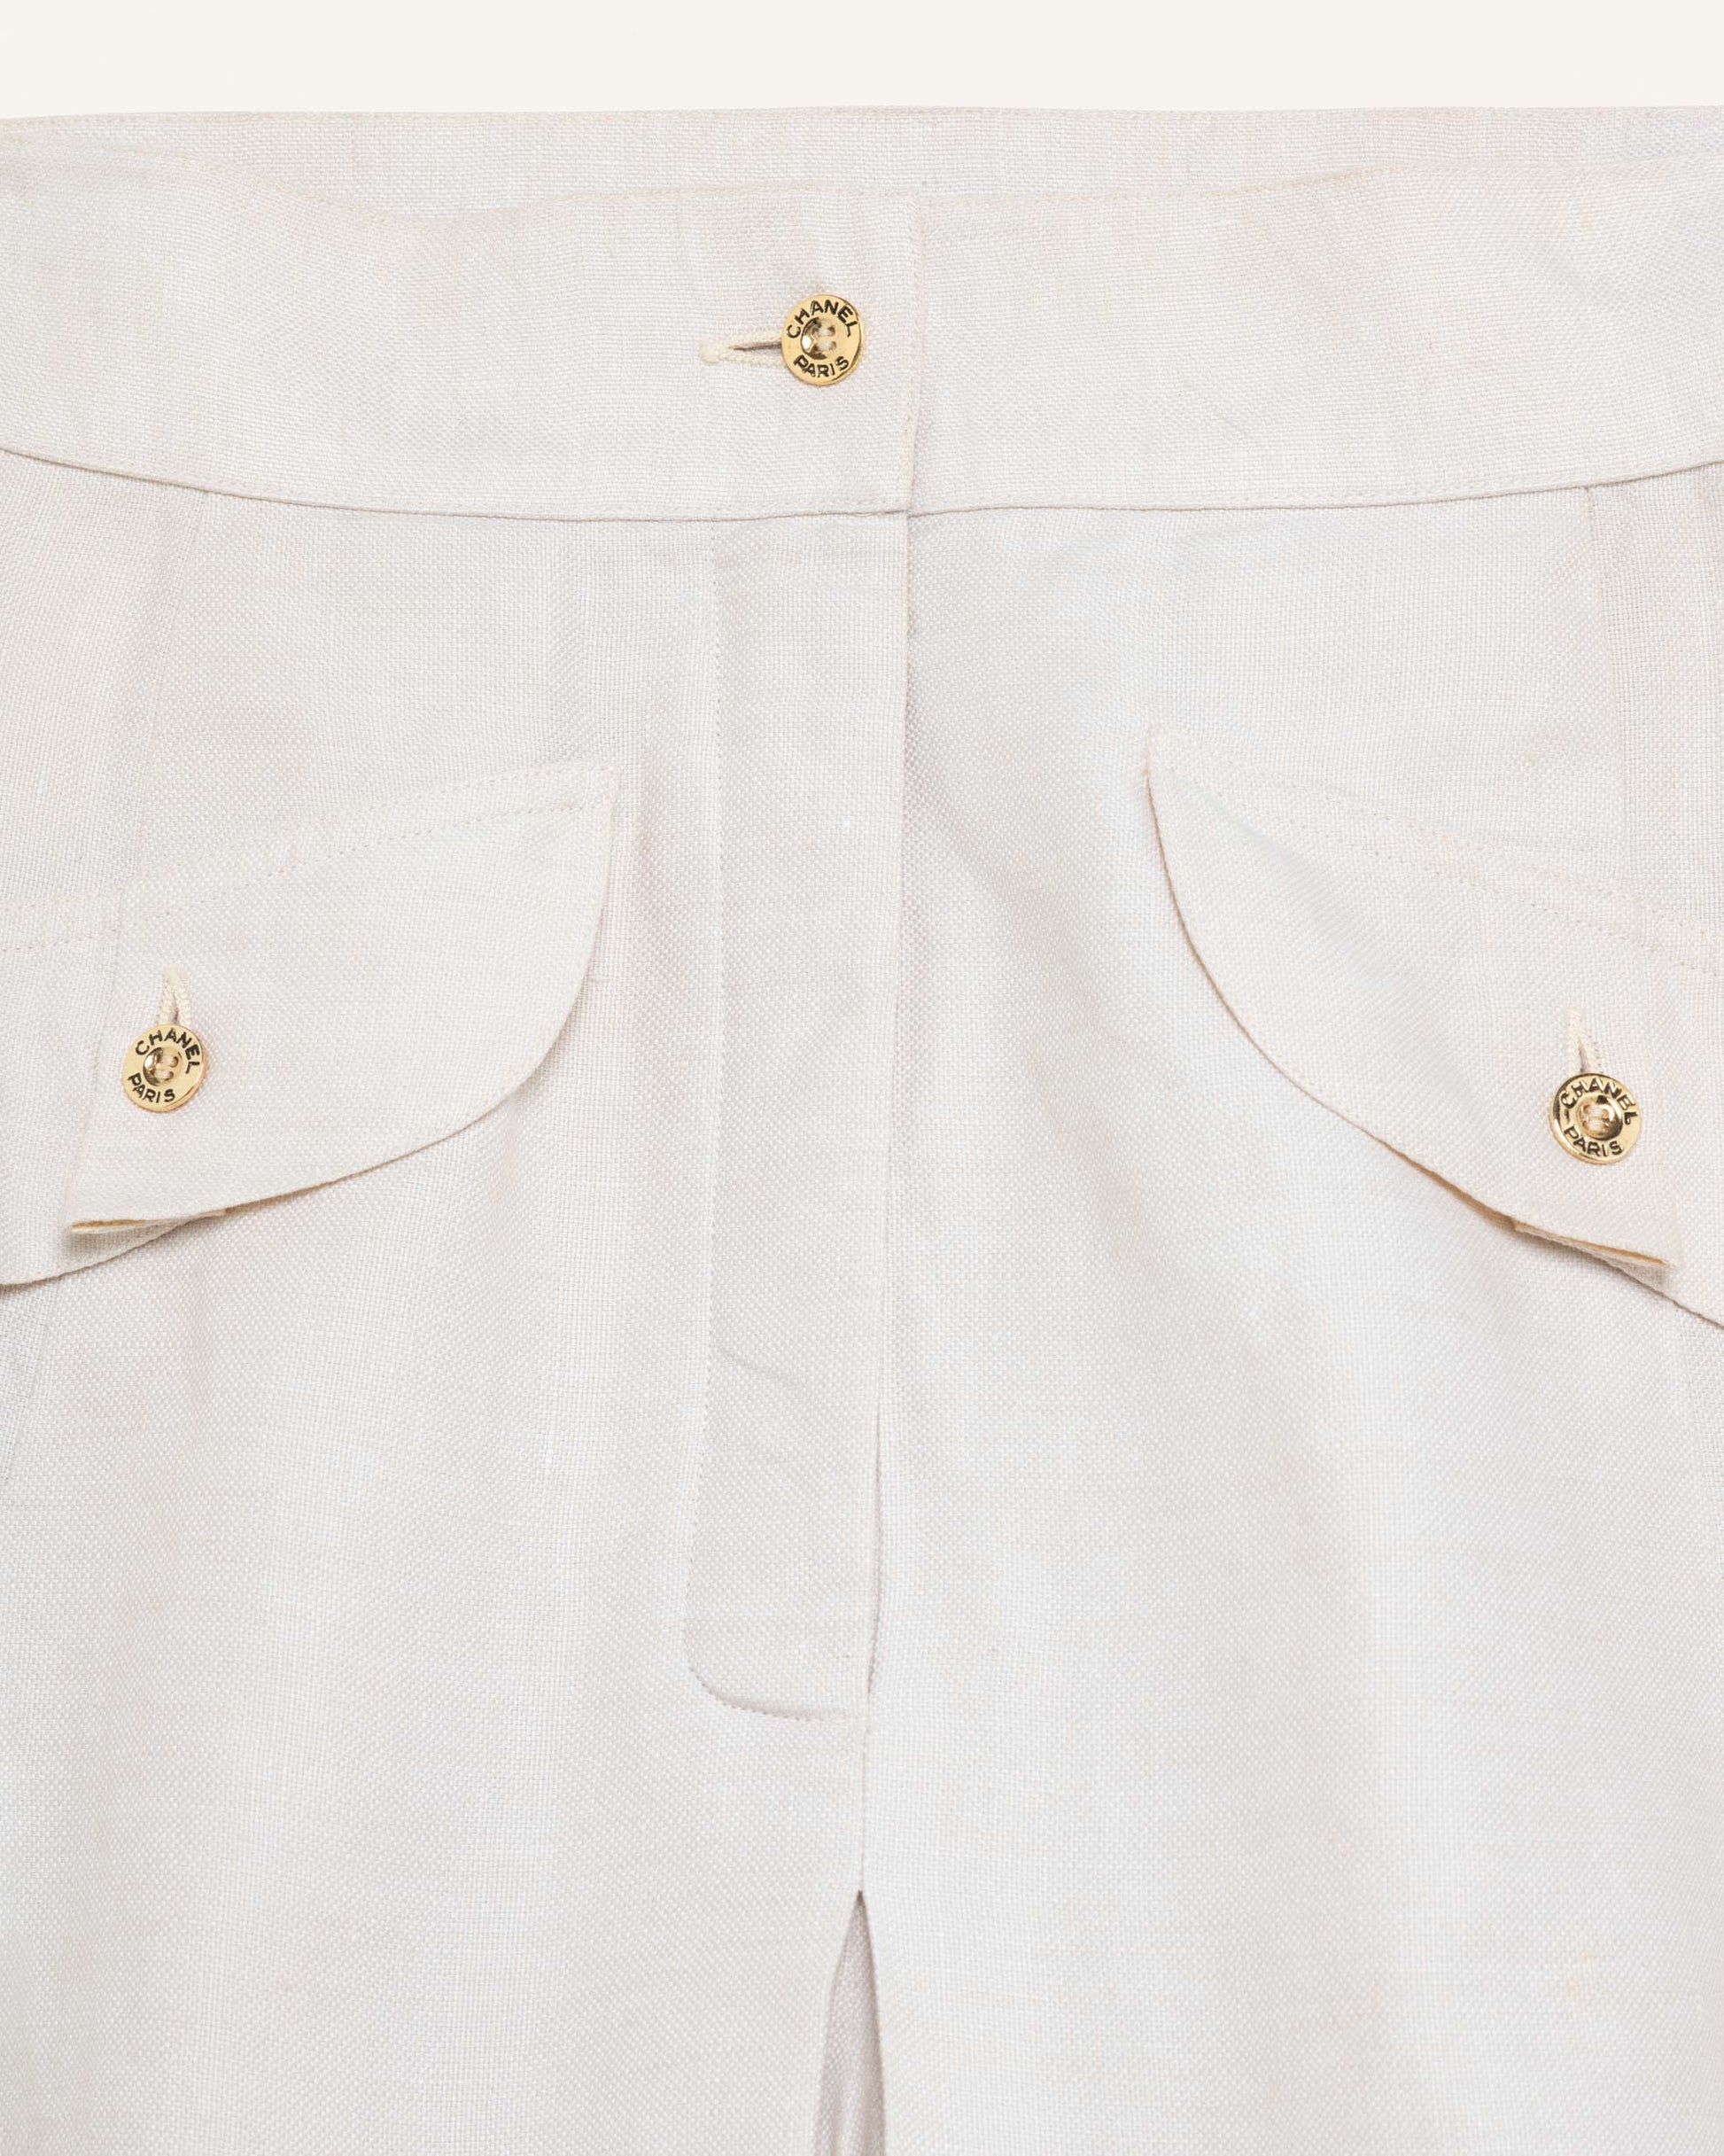 FALLON-jupe-short-chanel-bleige-lin-vintage-luxe-rare-mode-collection-femme00001